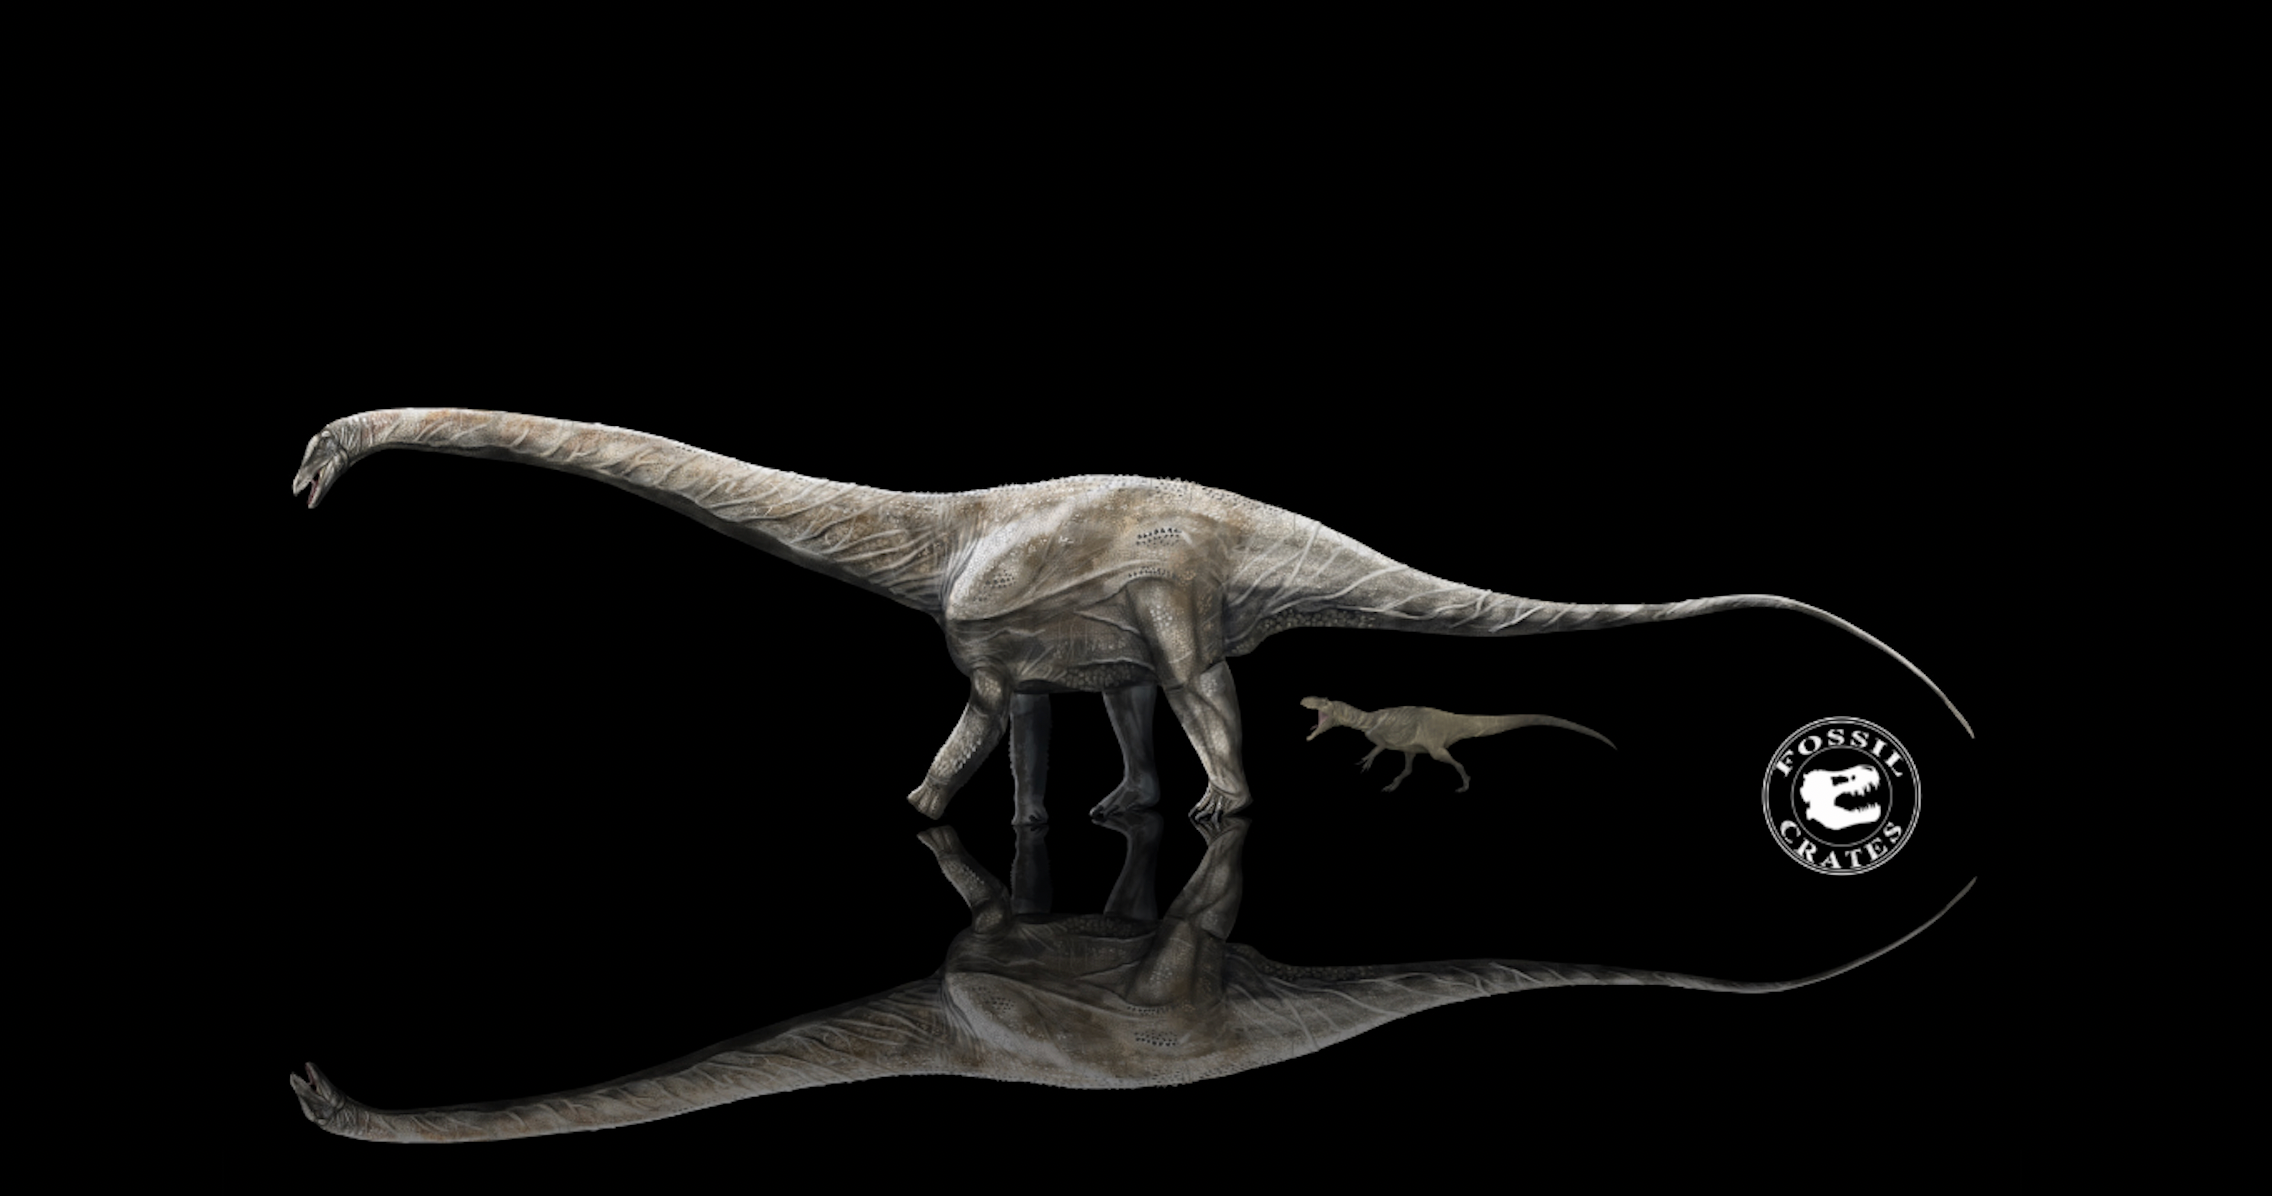 Illustration of the Supersaurus shown in comparison to the carnivorous Allosaurus